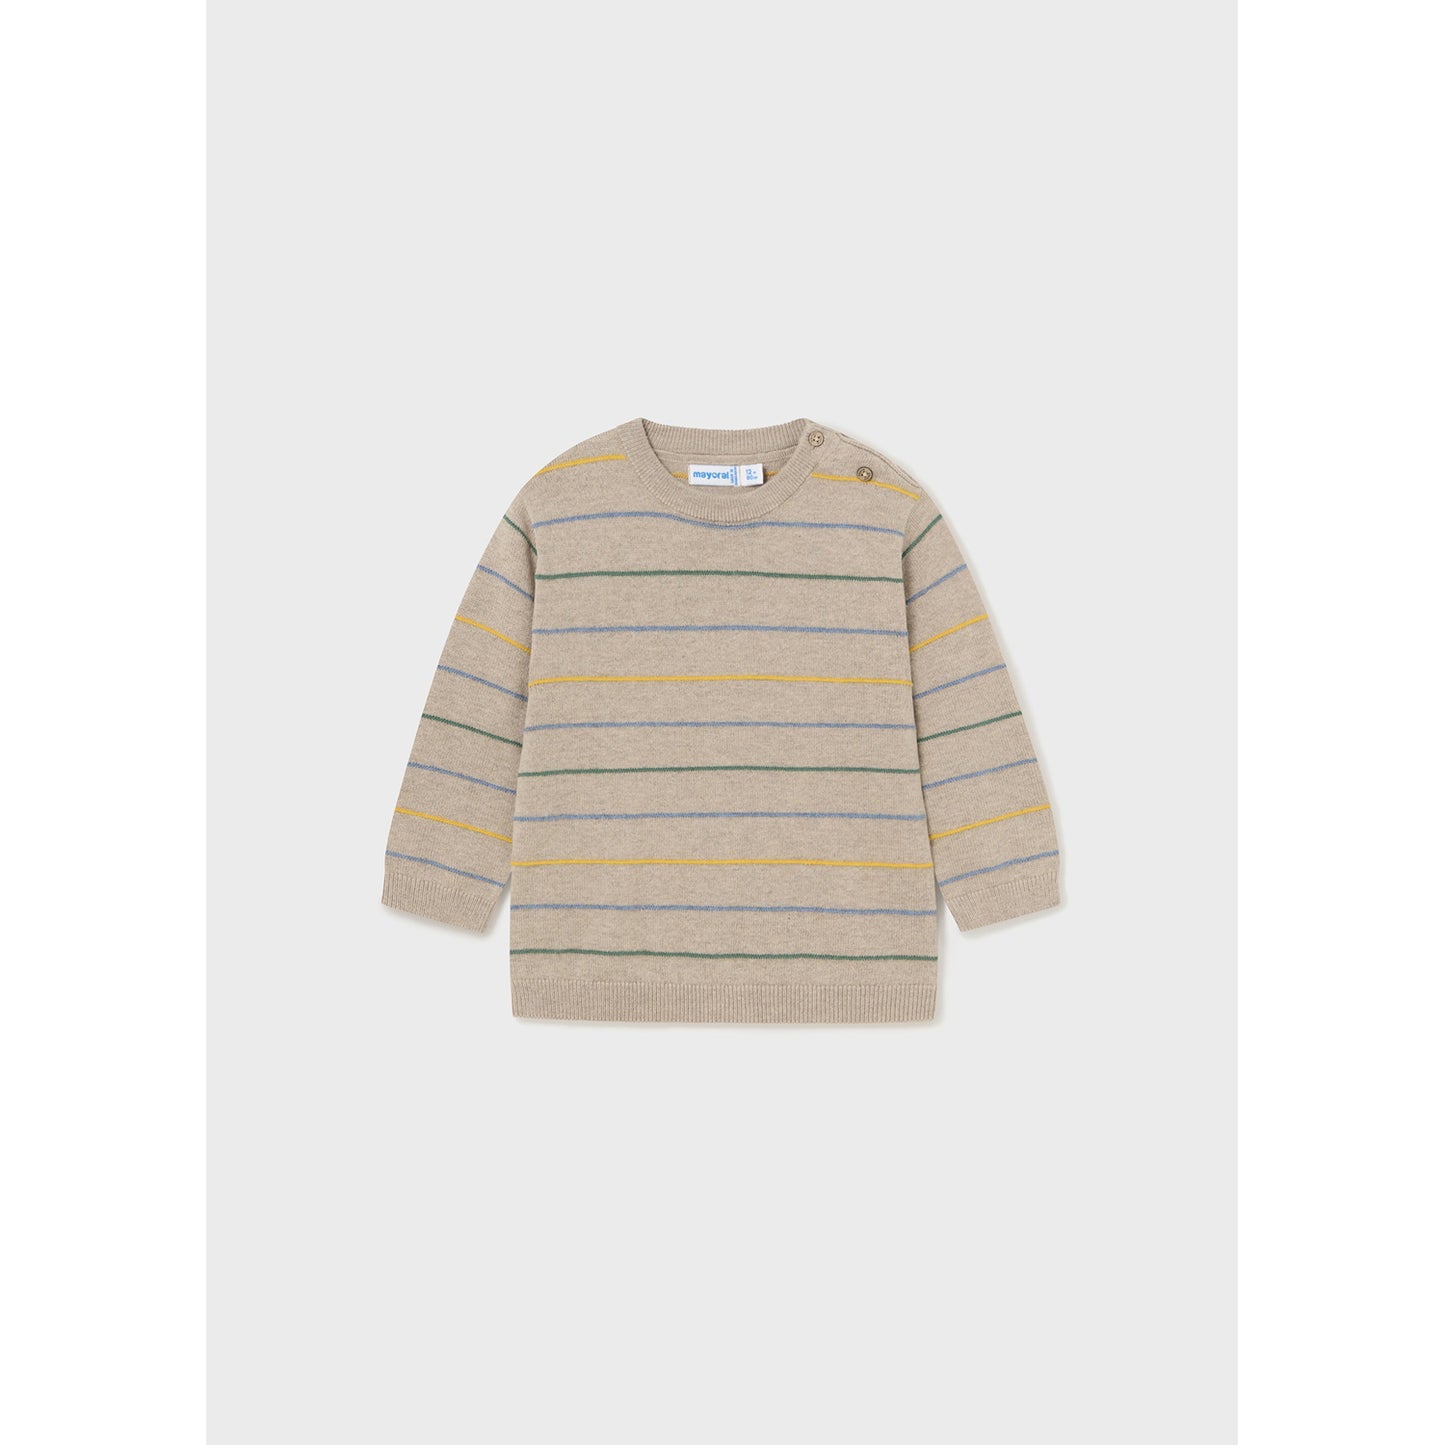 Mayoral - Basic Stripe Sweater in Mushroom